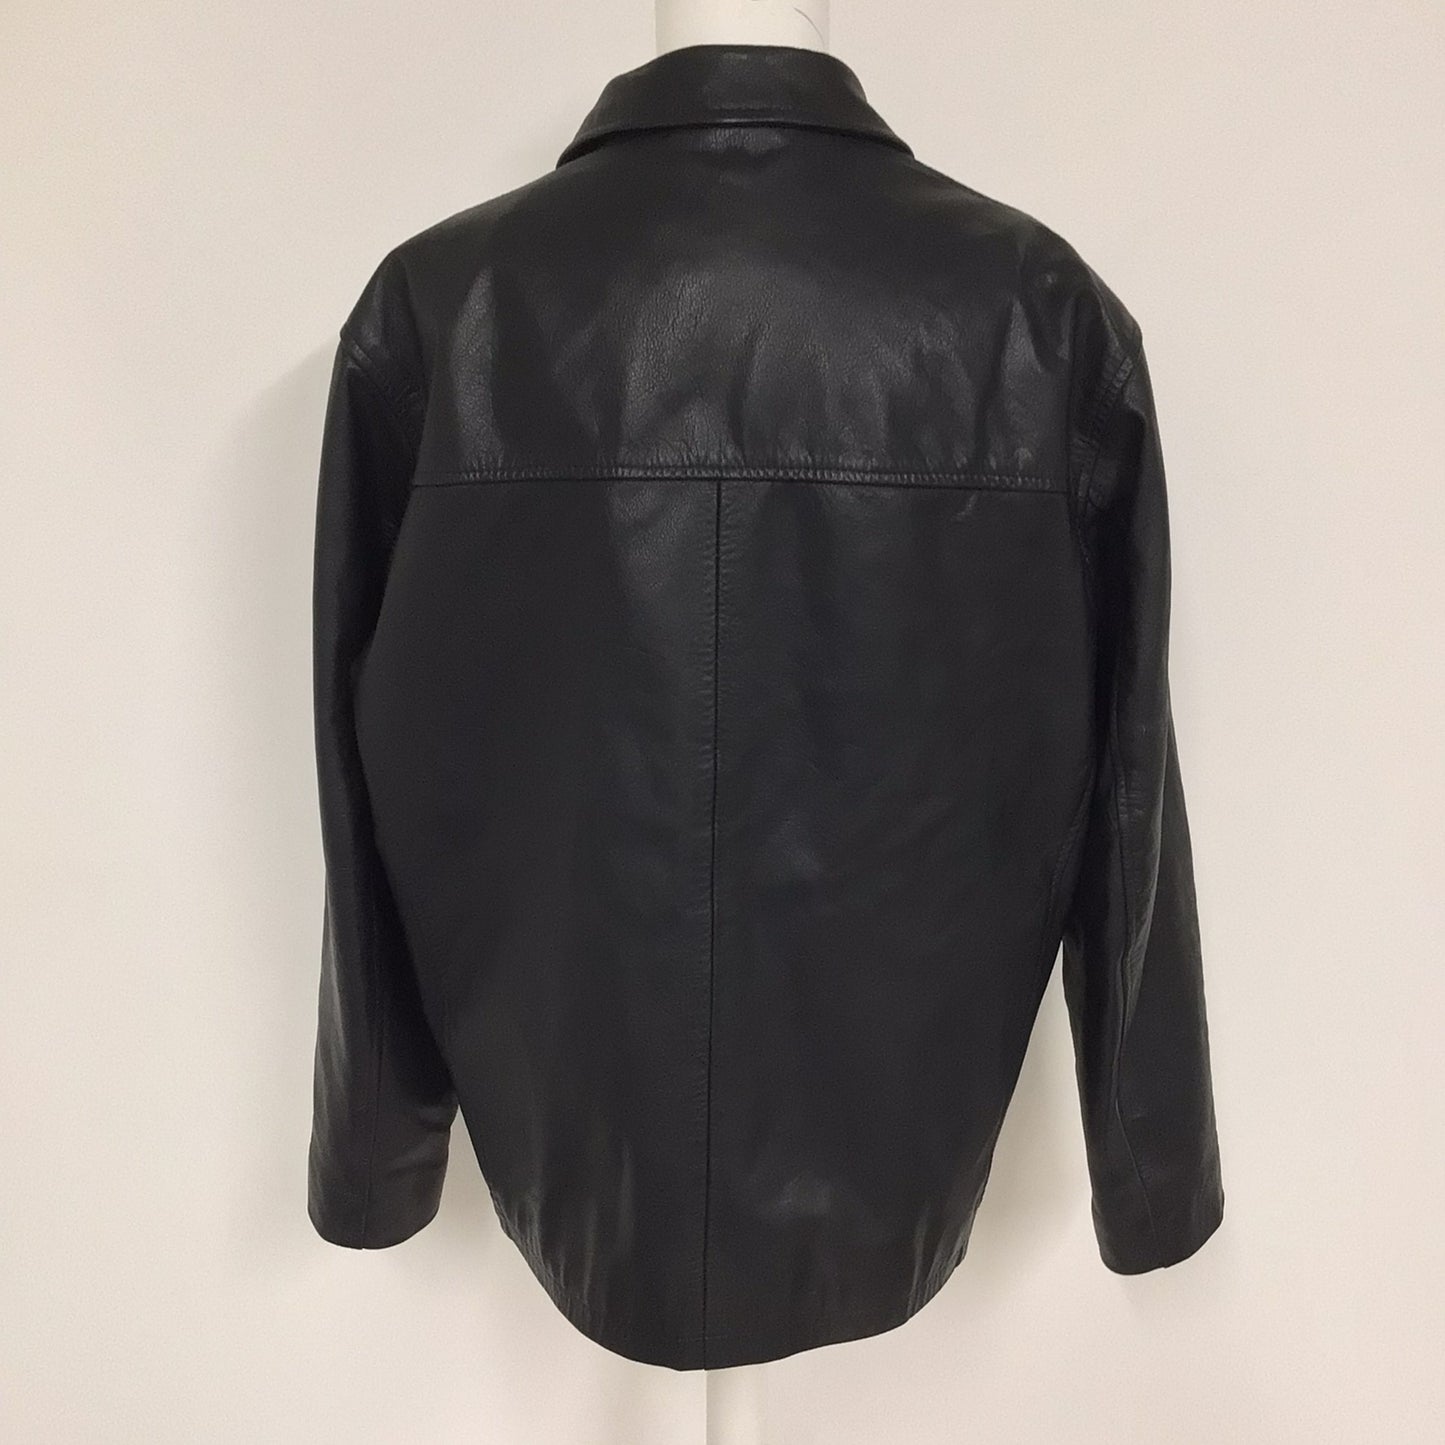 Ben Sherman Black Real Leather Jacket Size L